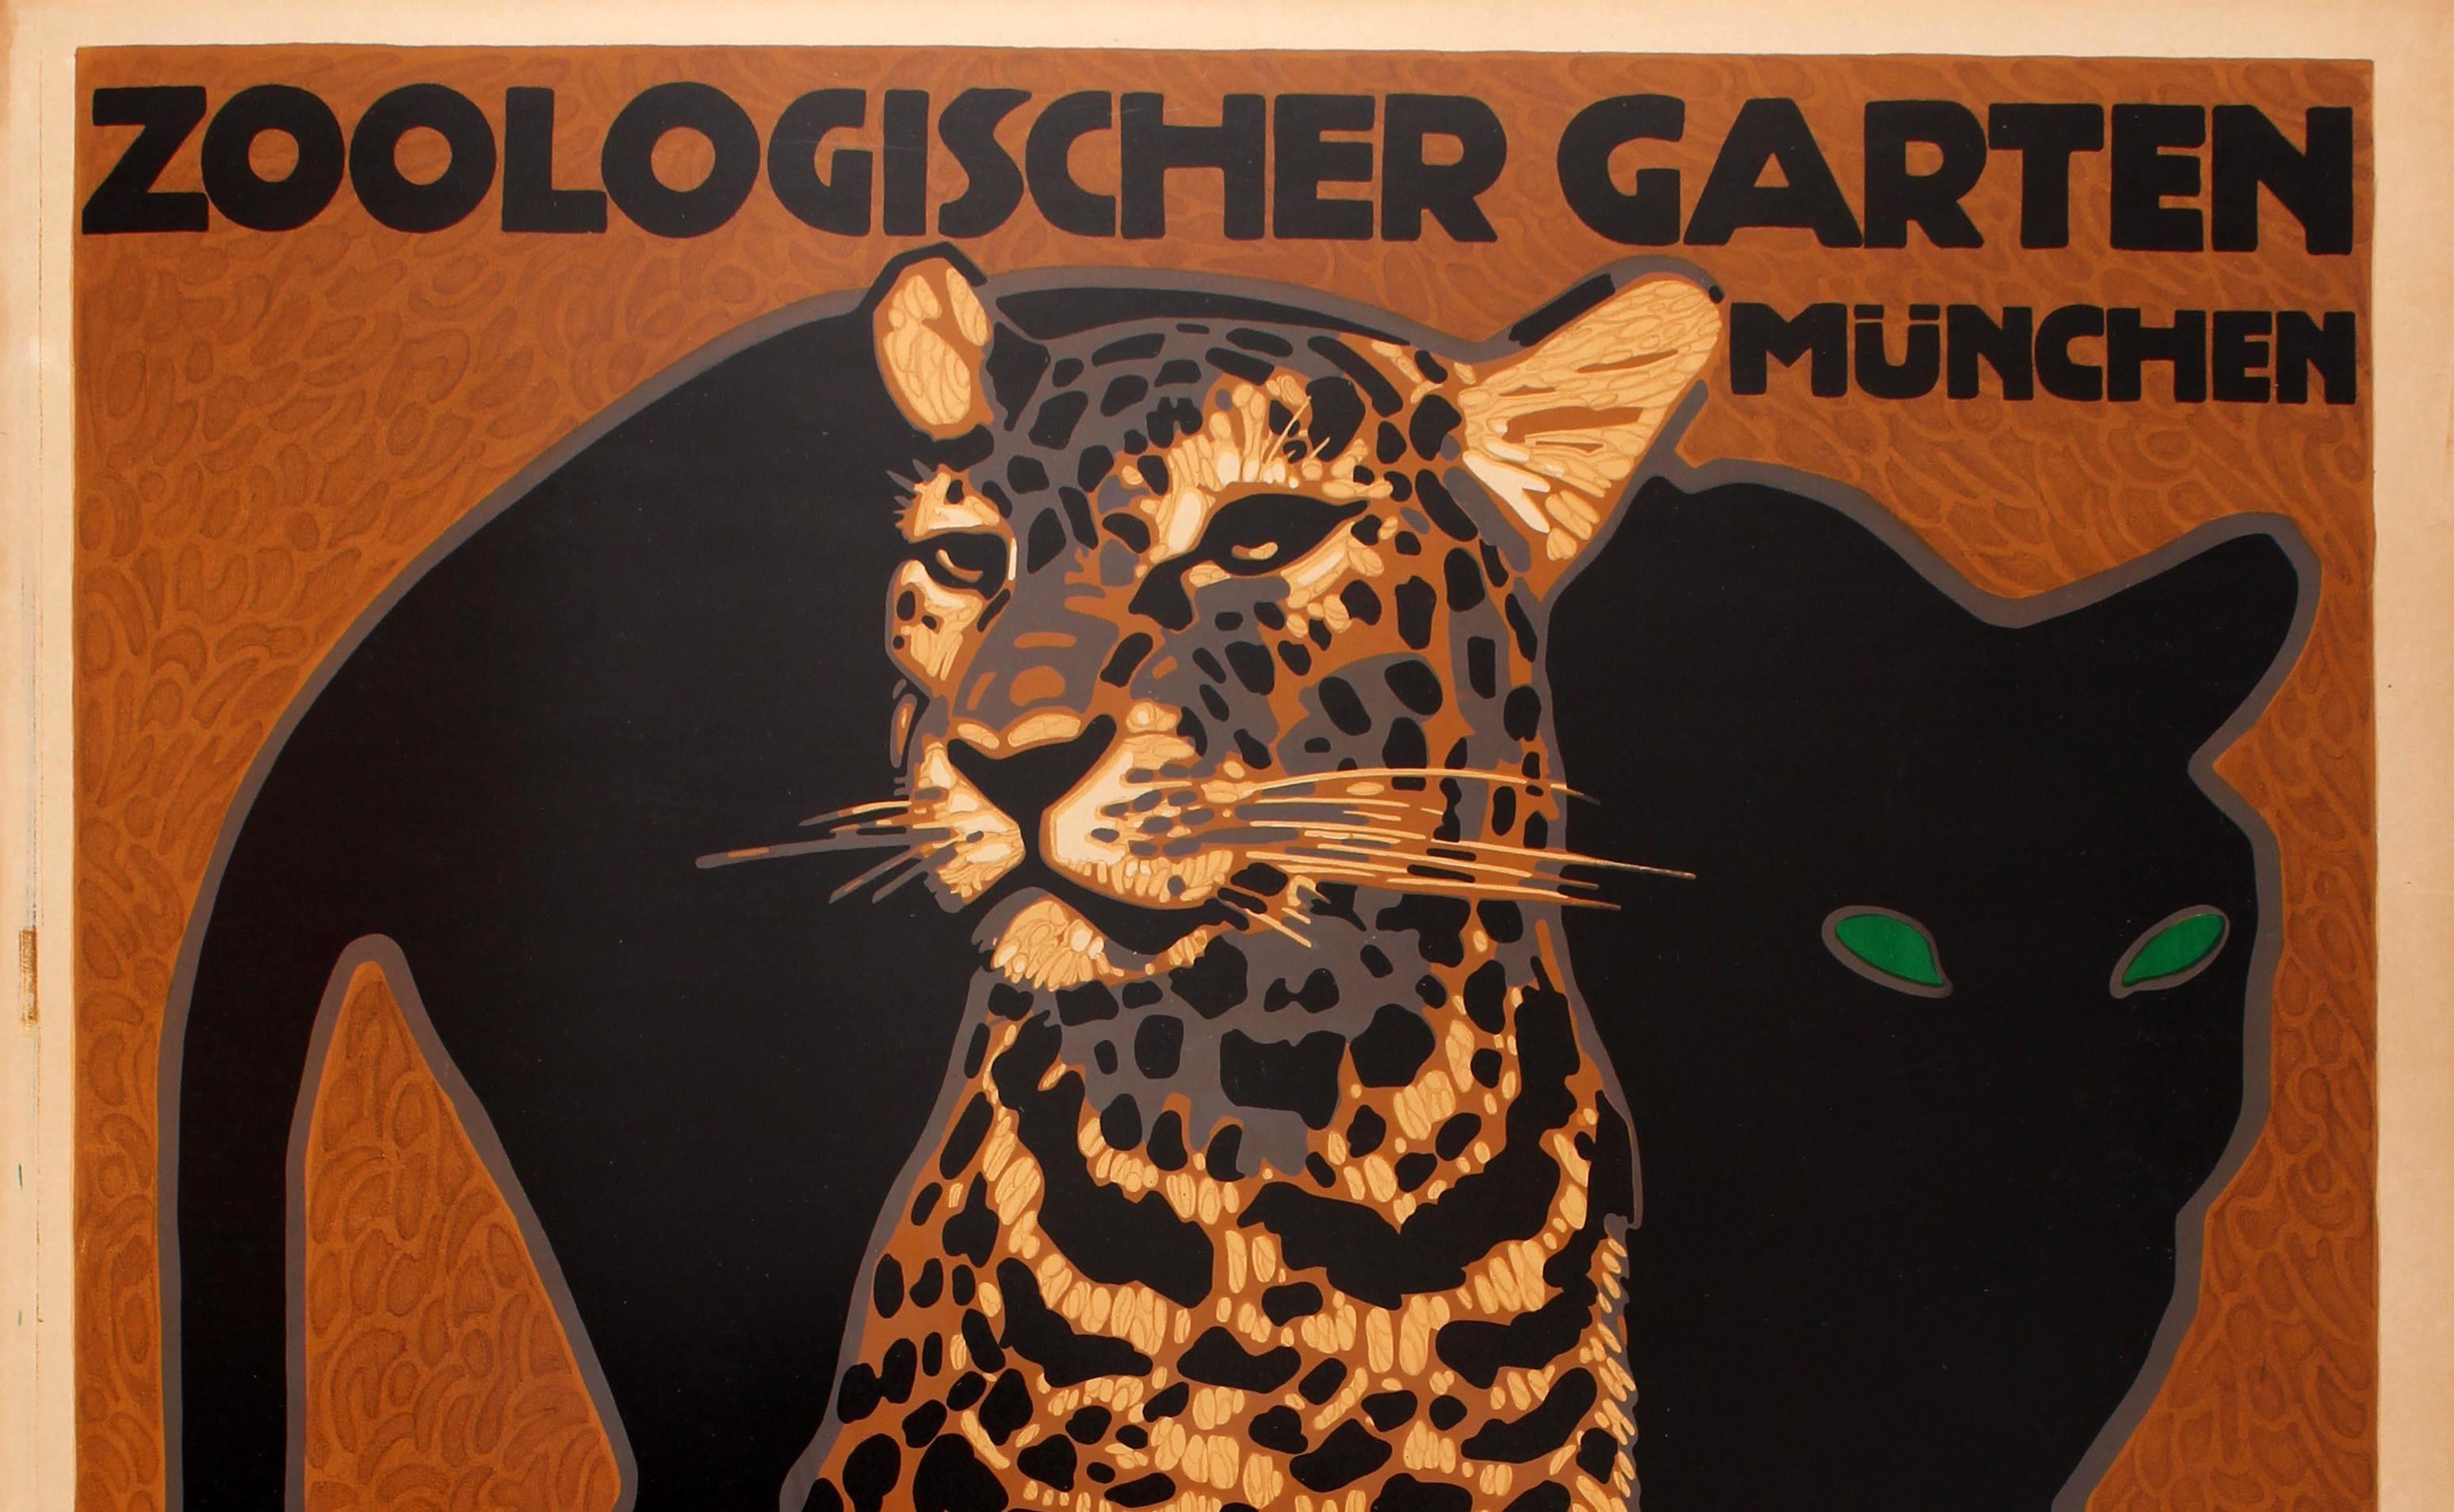 Original Antique Poster by Hohlwein for Munich Zoo - Zoologischer Garten Munchen - Print by Ludwig Hohlwein